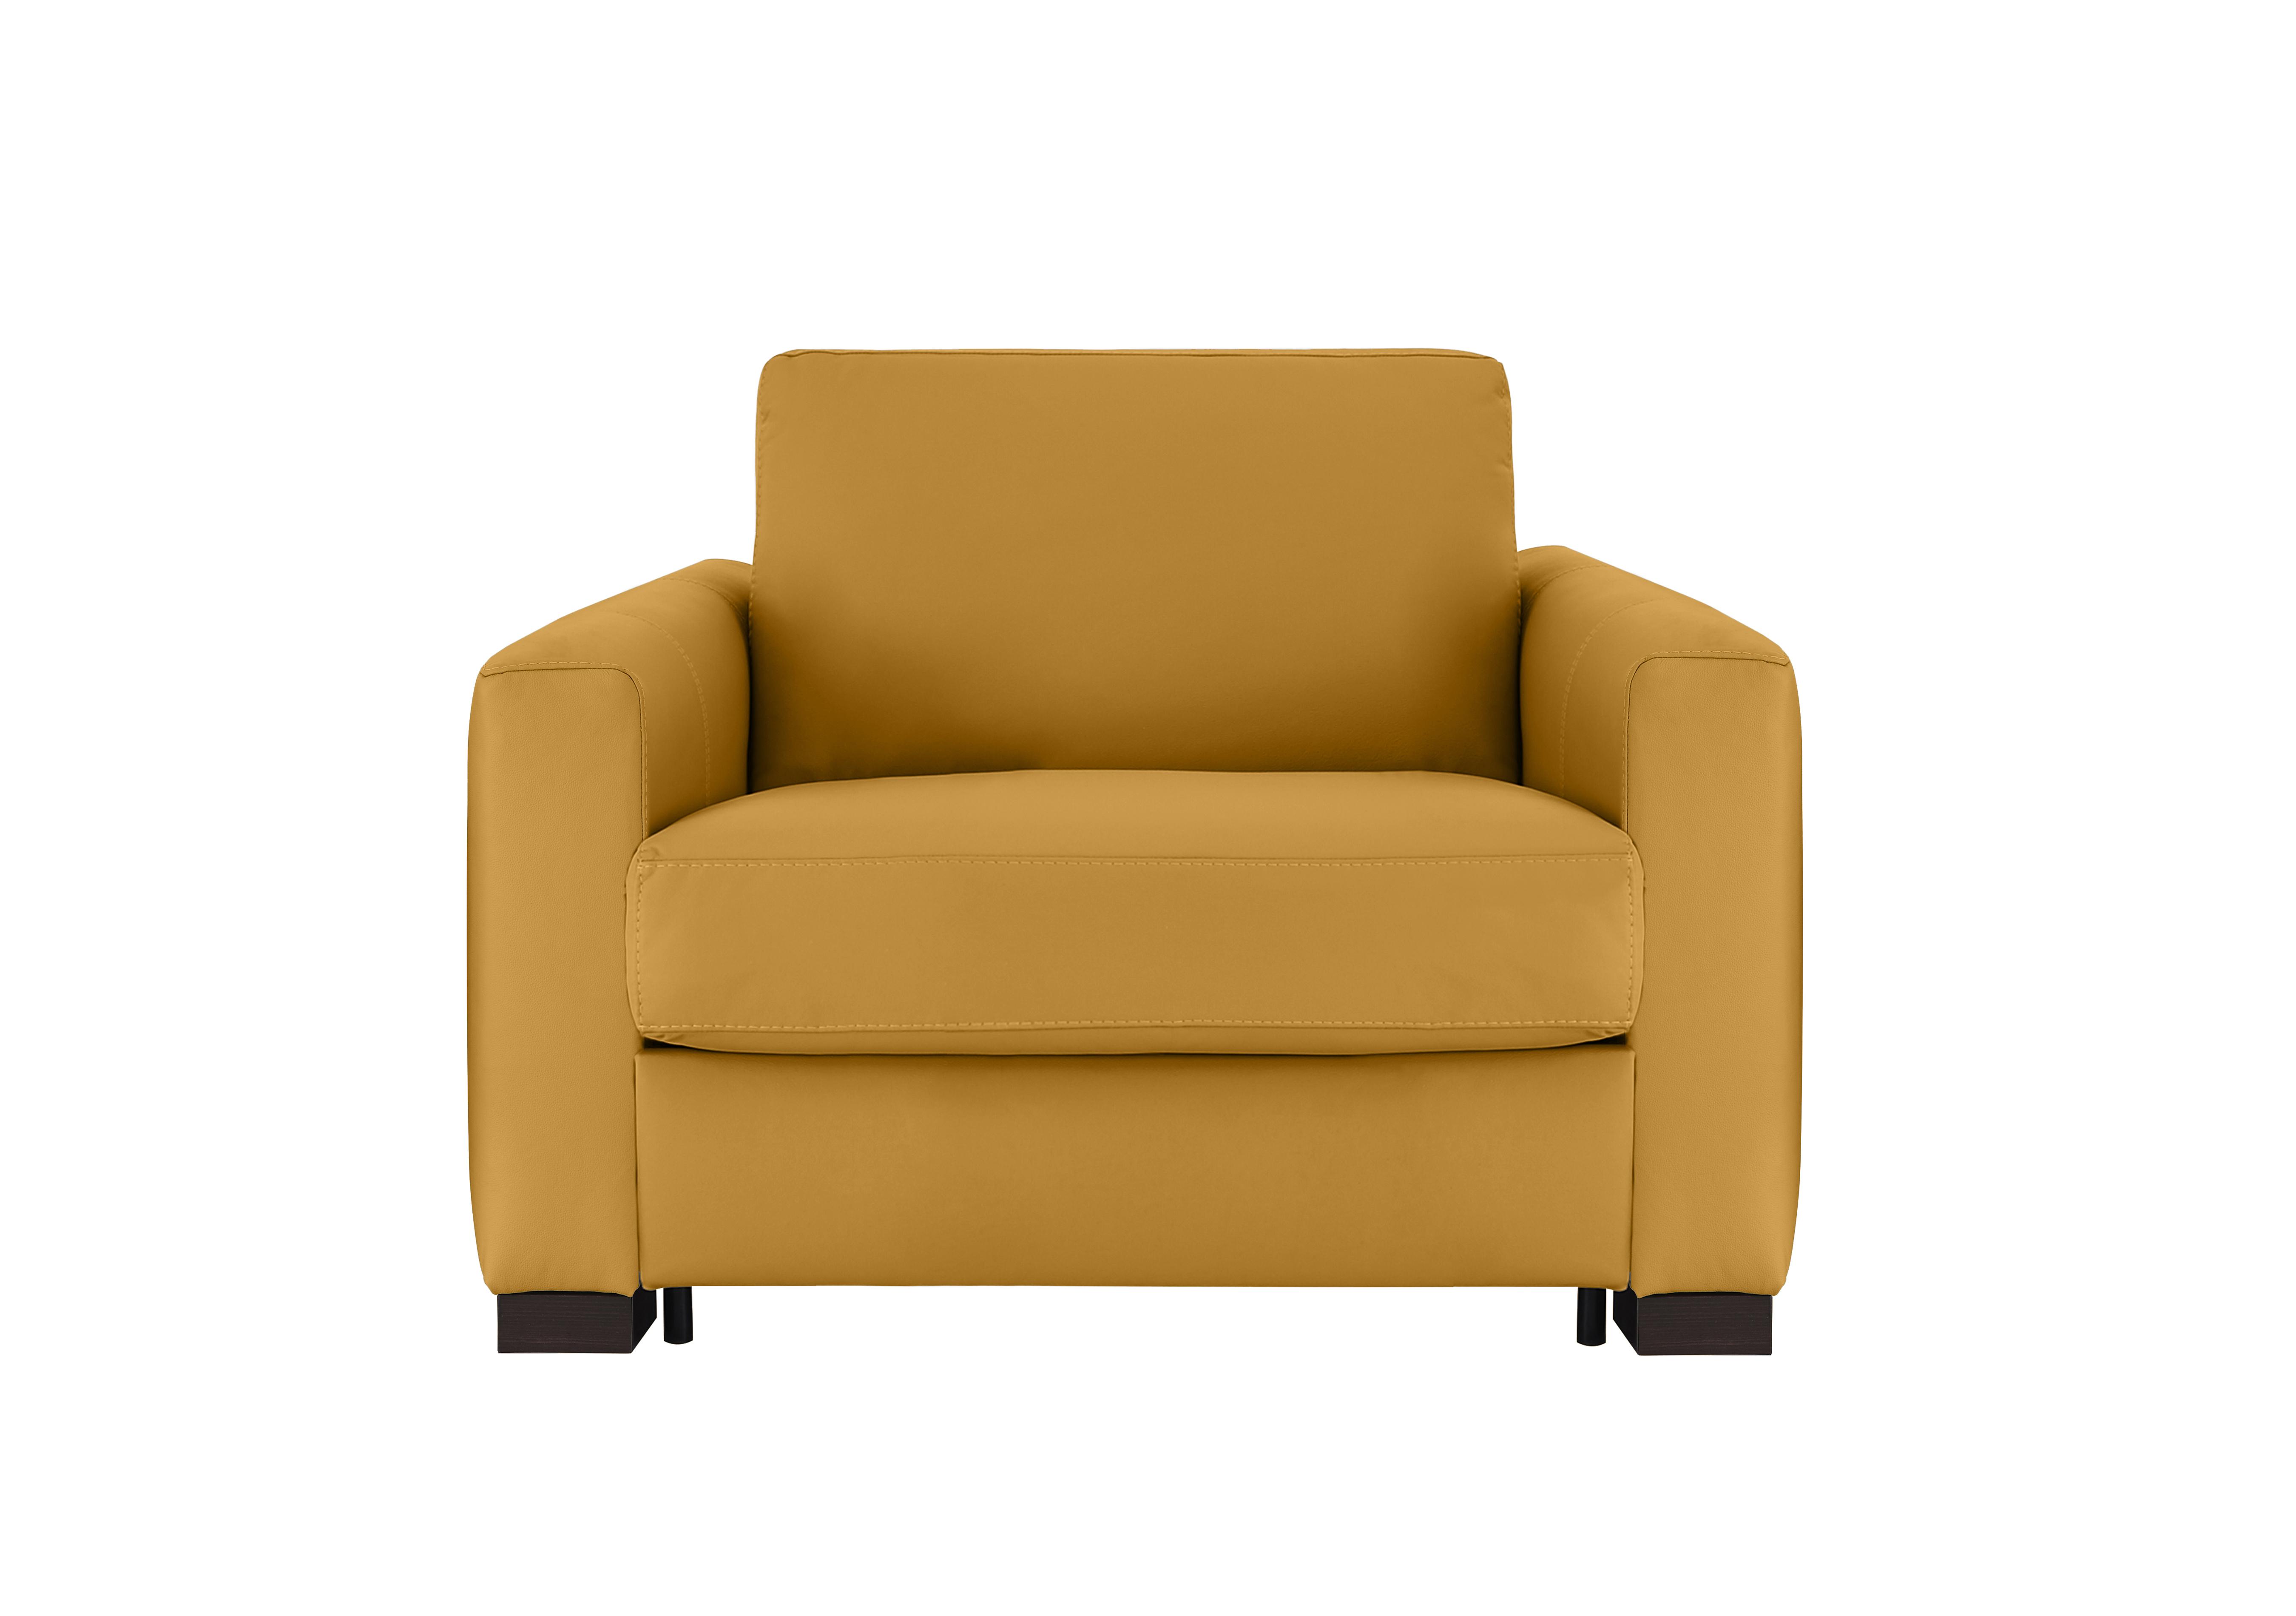 Alcova Leather Chair Sofa Bed with Box Arms in Torello Senape 355 on Furniture Village